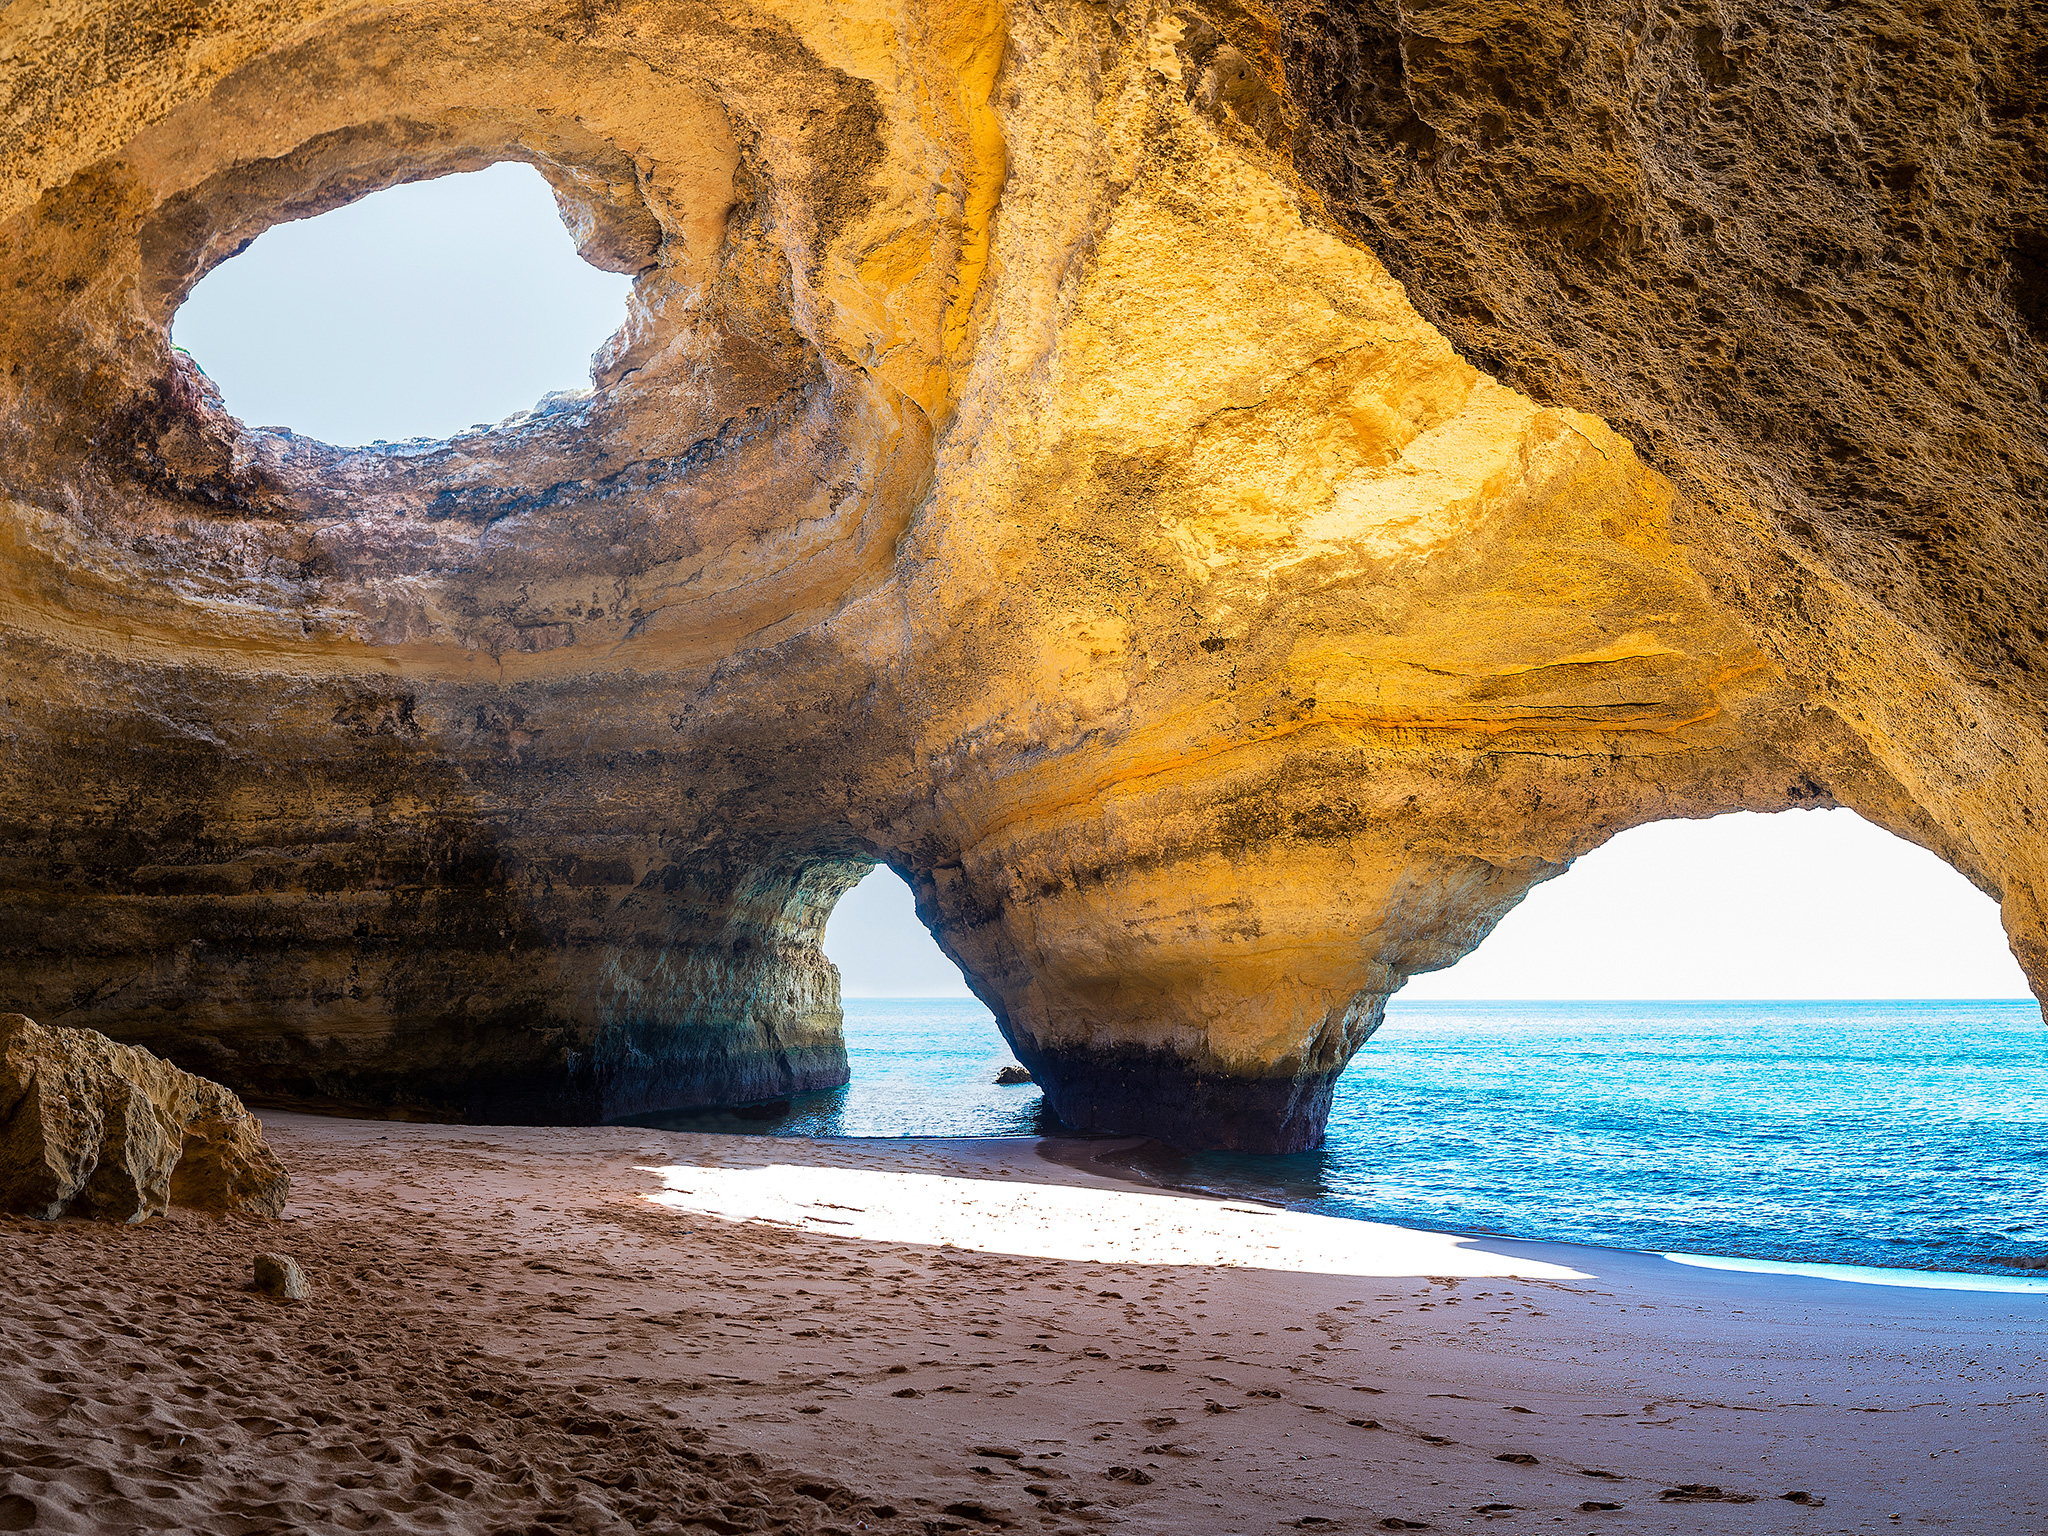 Benagil Cave, Algarve, Portugal